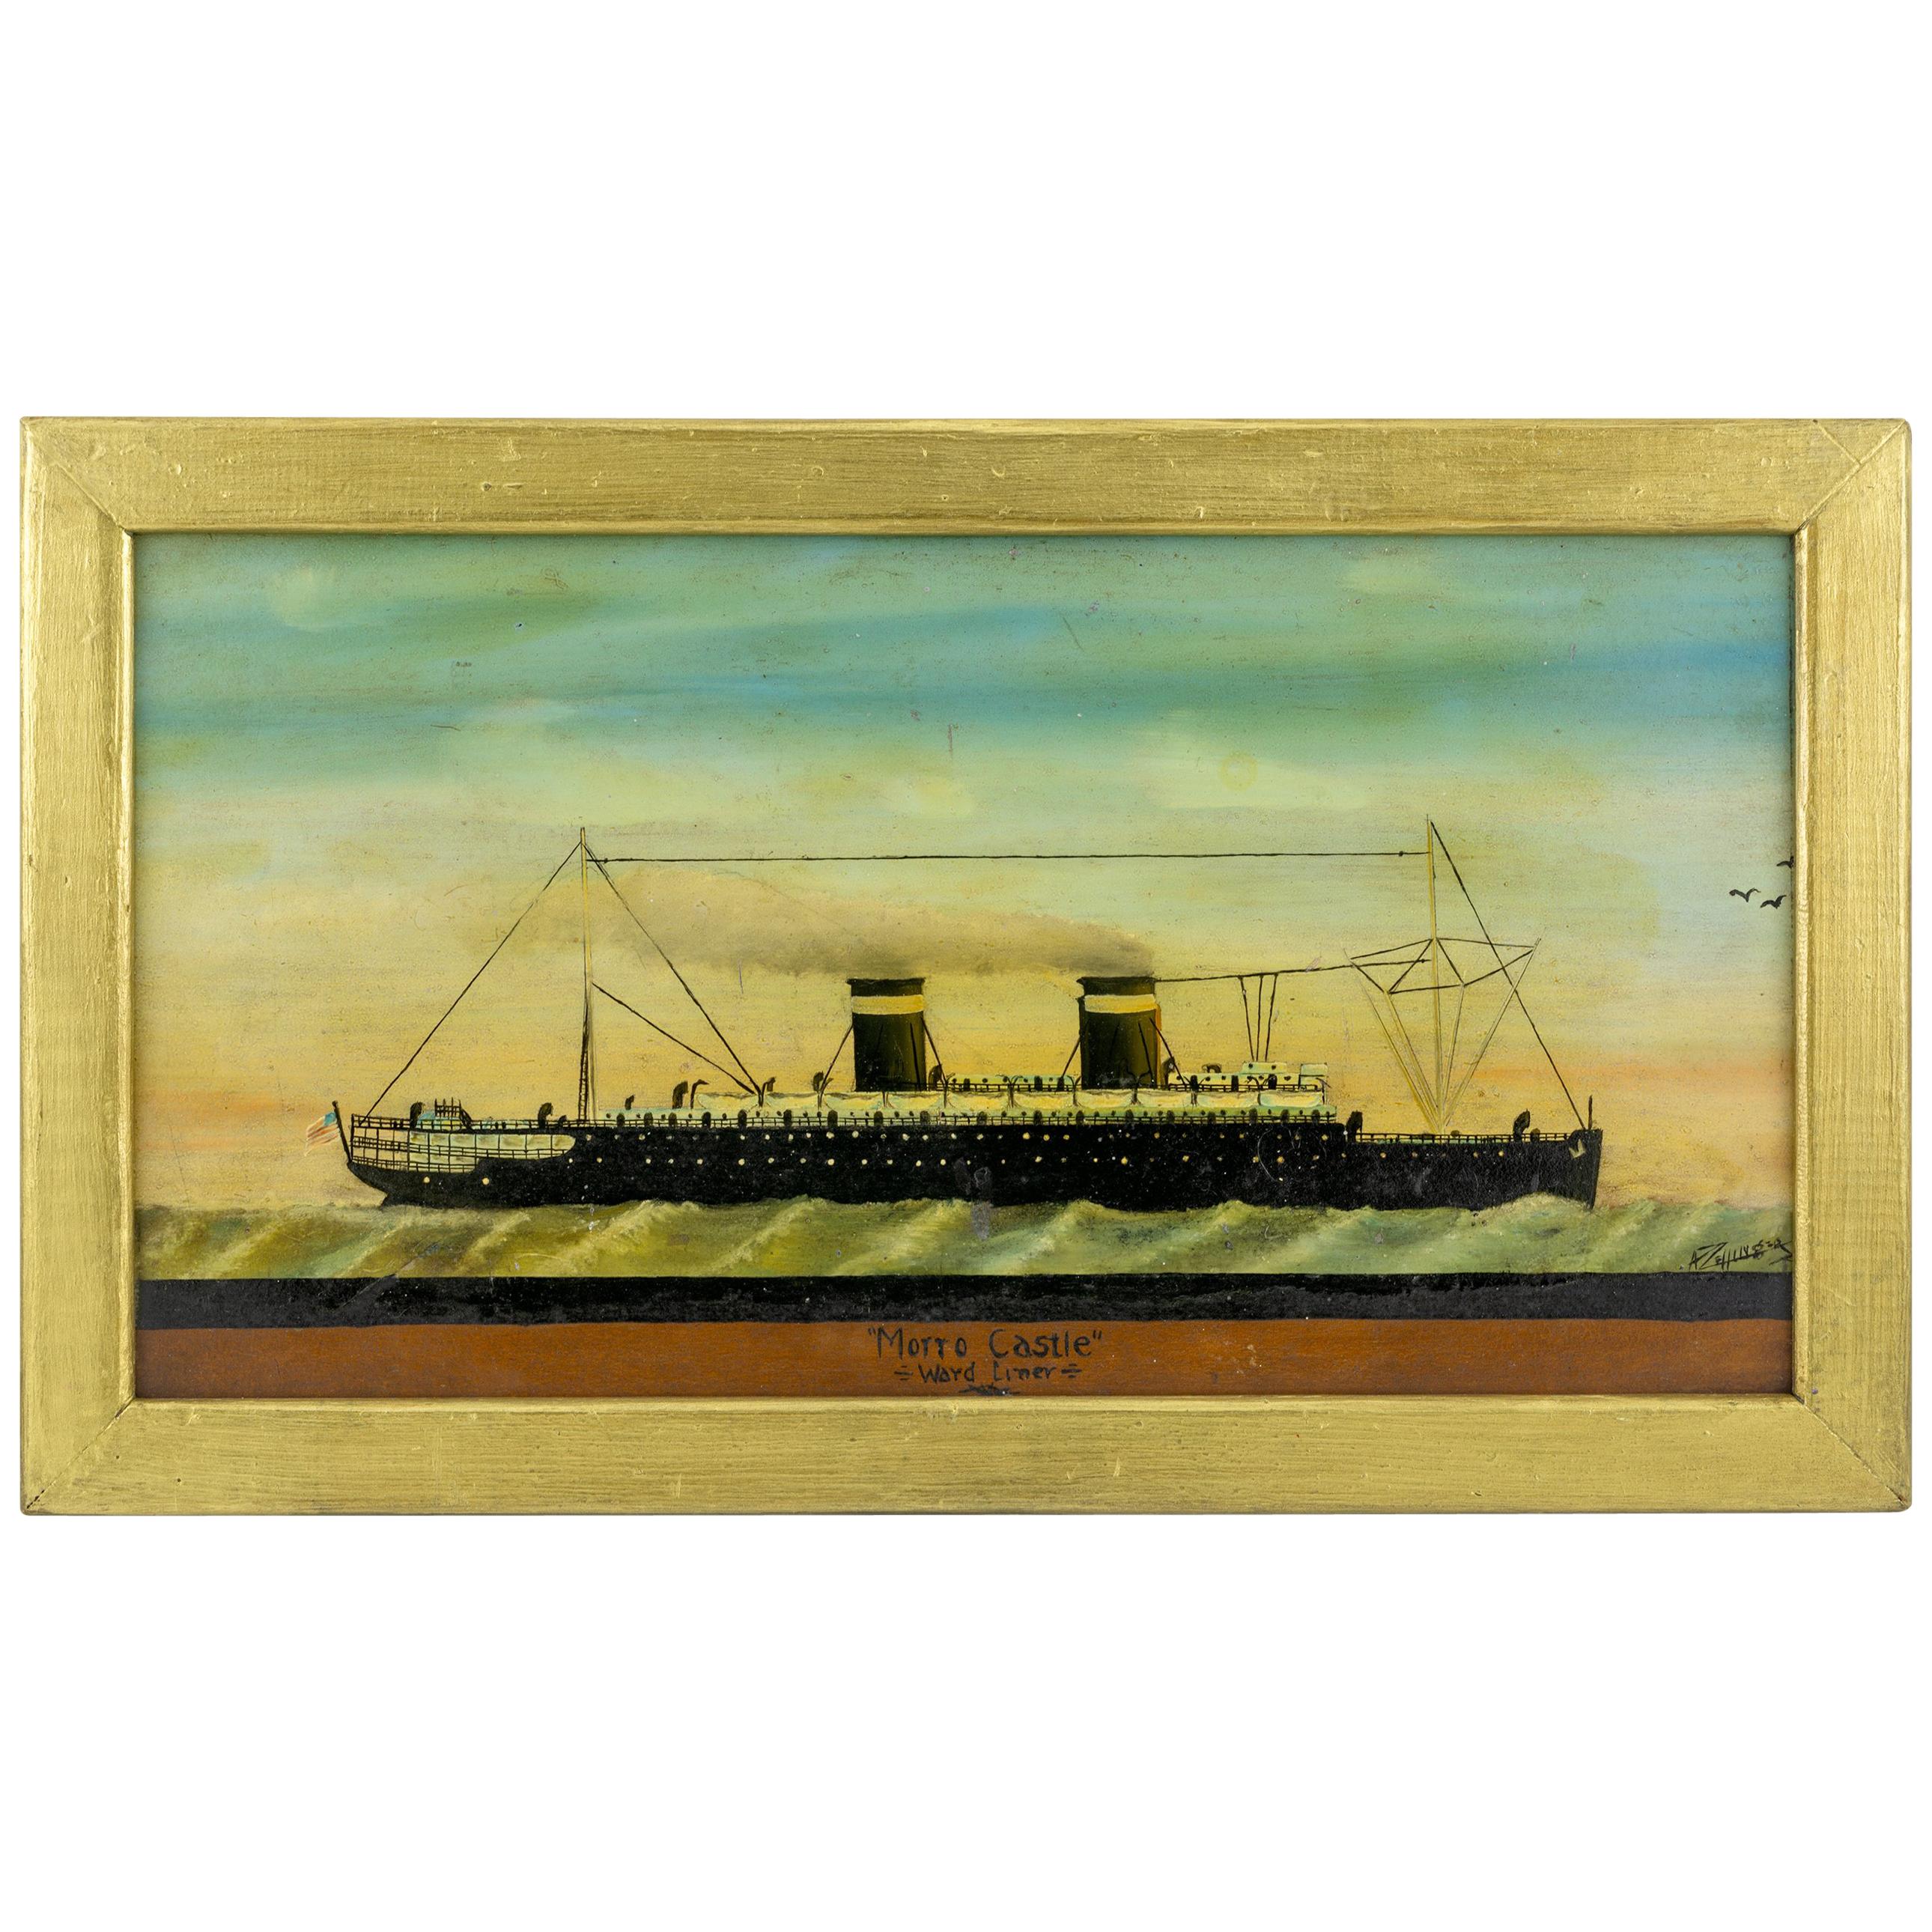 Ship Portrait of Steamer "Morro Castle"